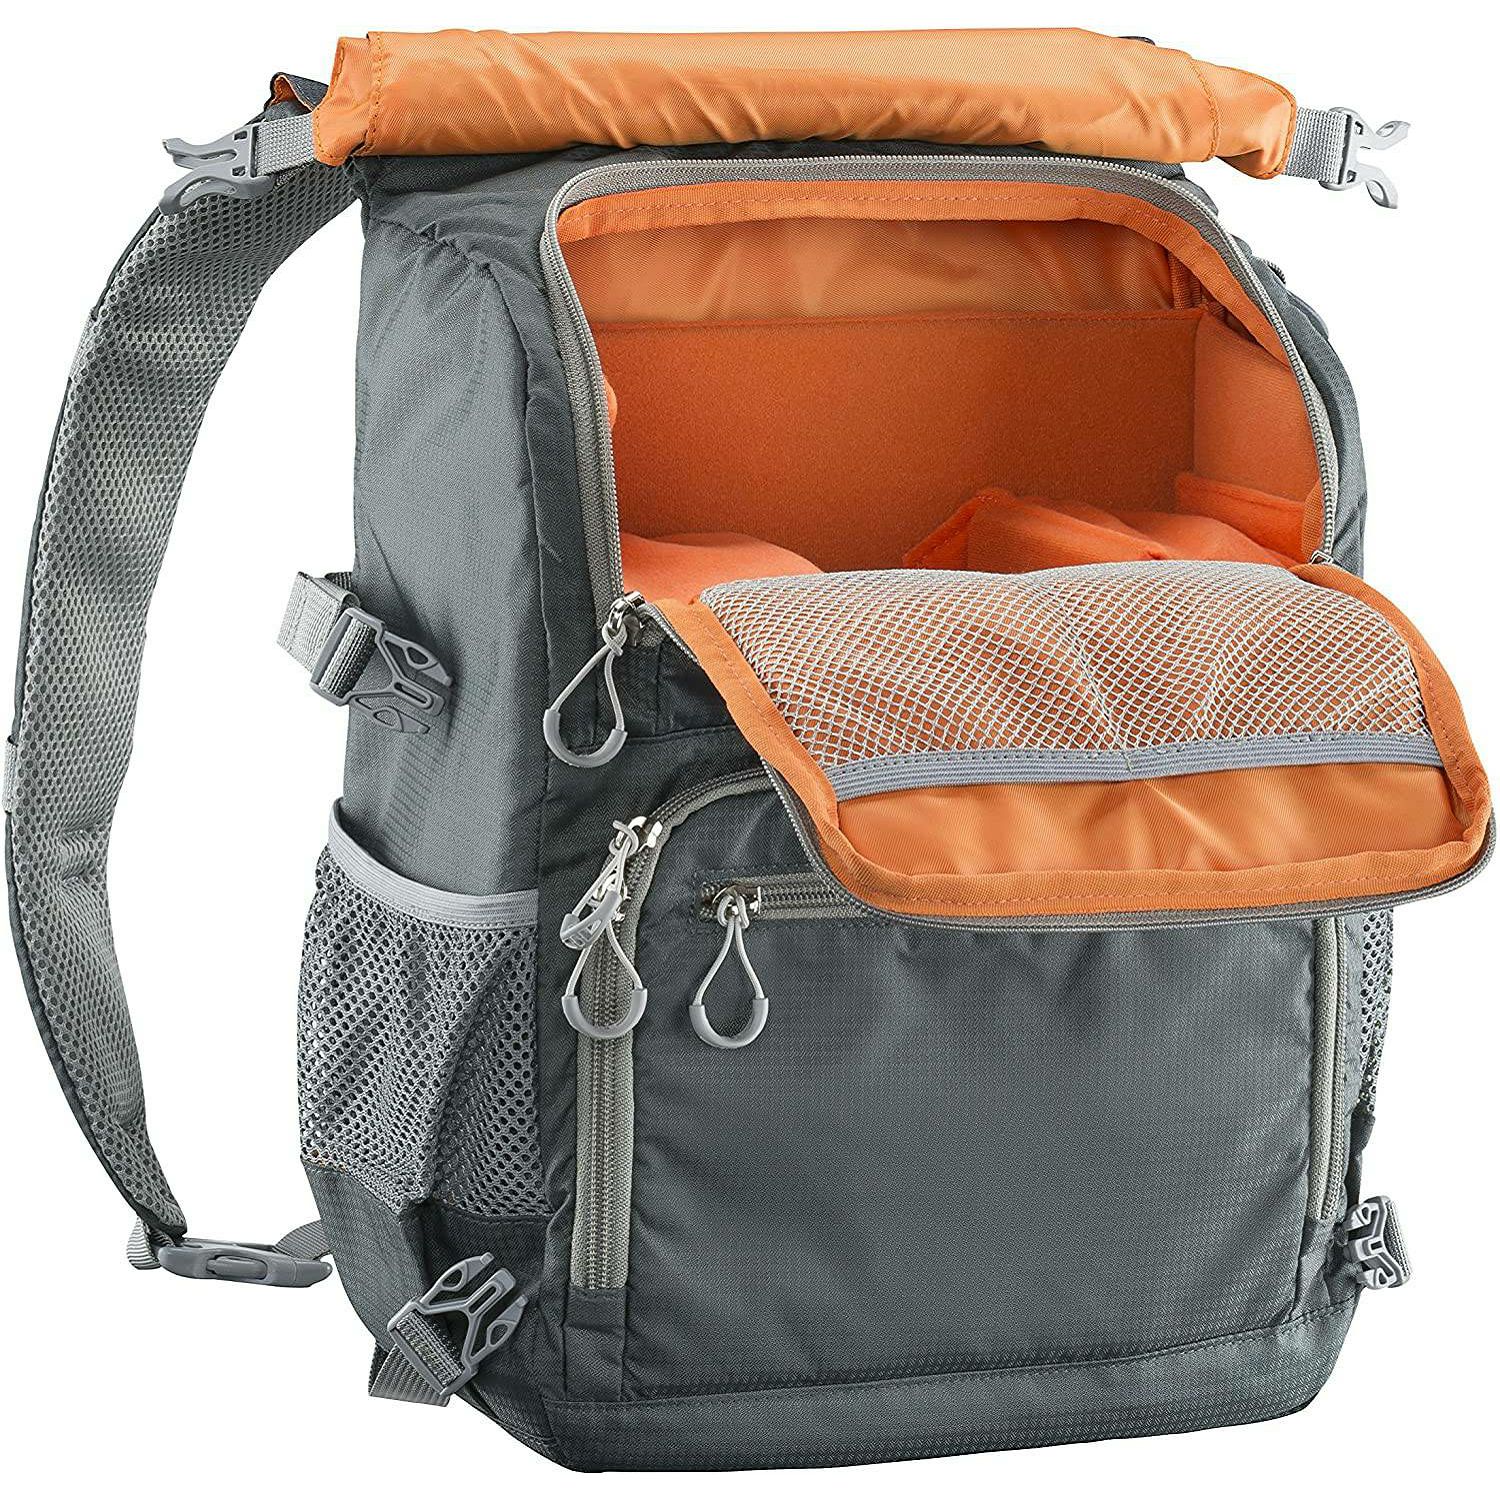 Mantona elementsPro 30 Camera Backpack Dual ruksak za DSLR i dodatnu opremu narančasto-siva